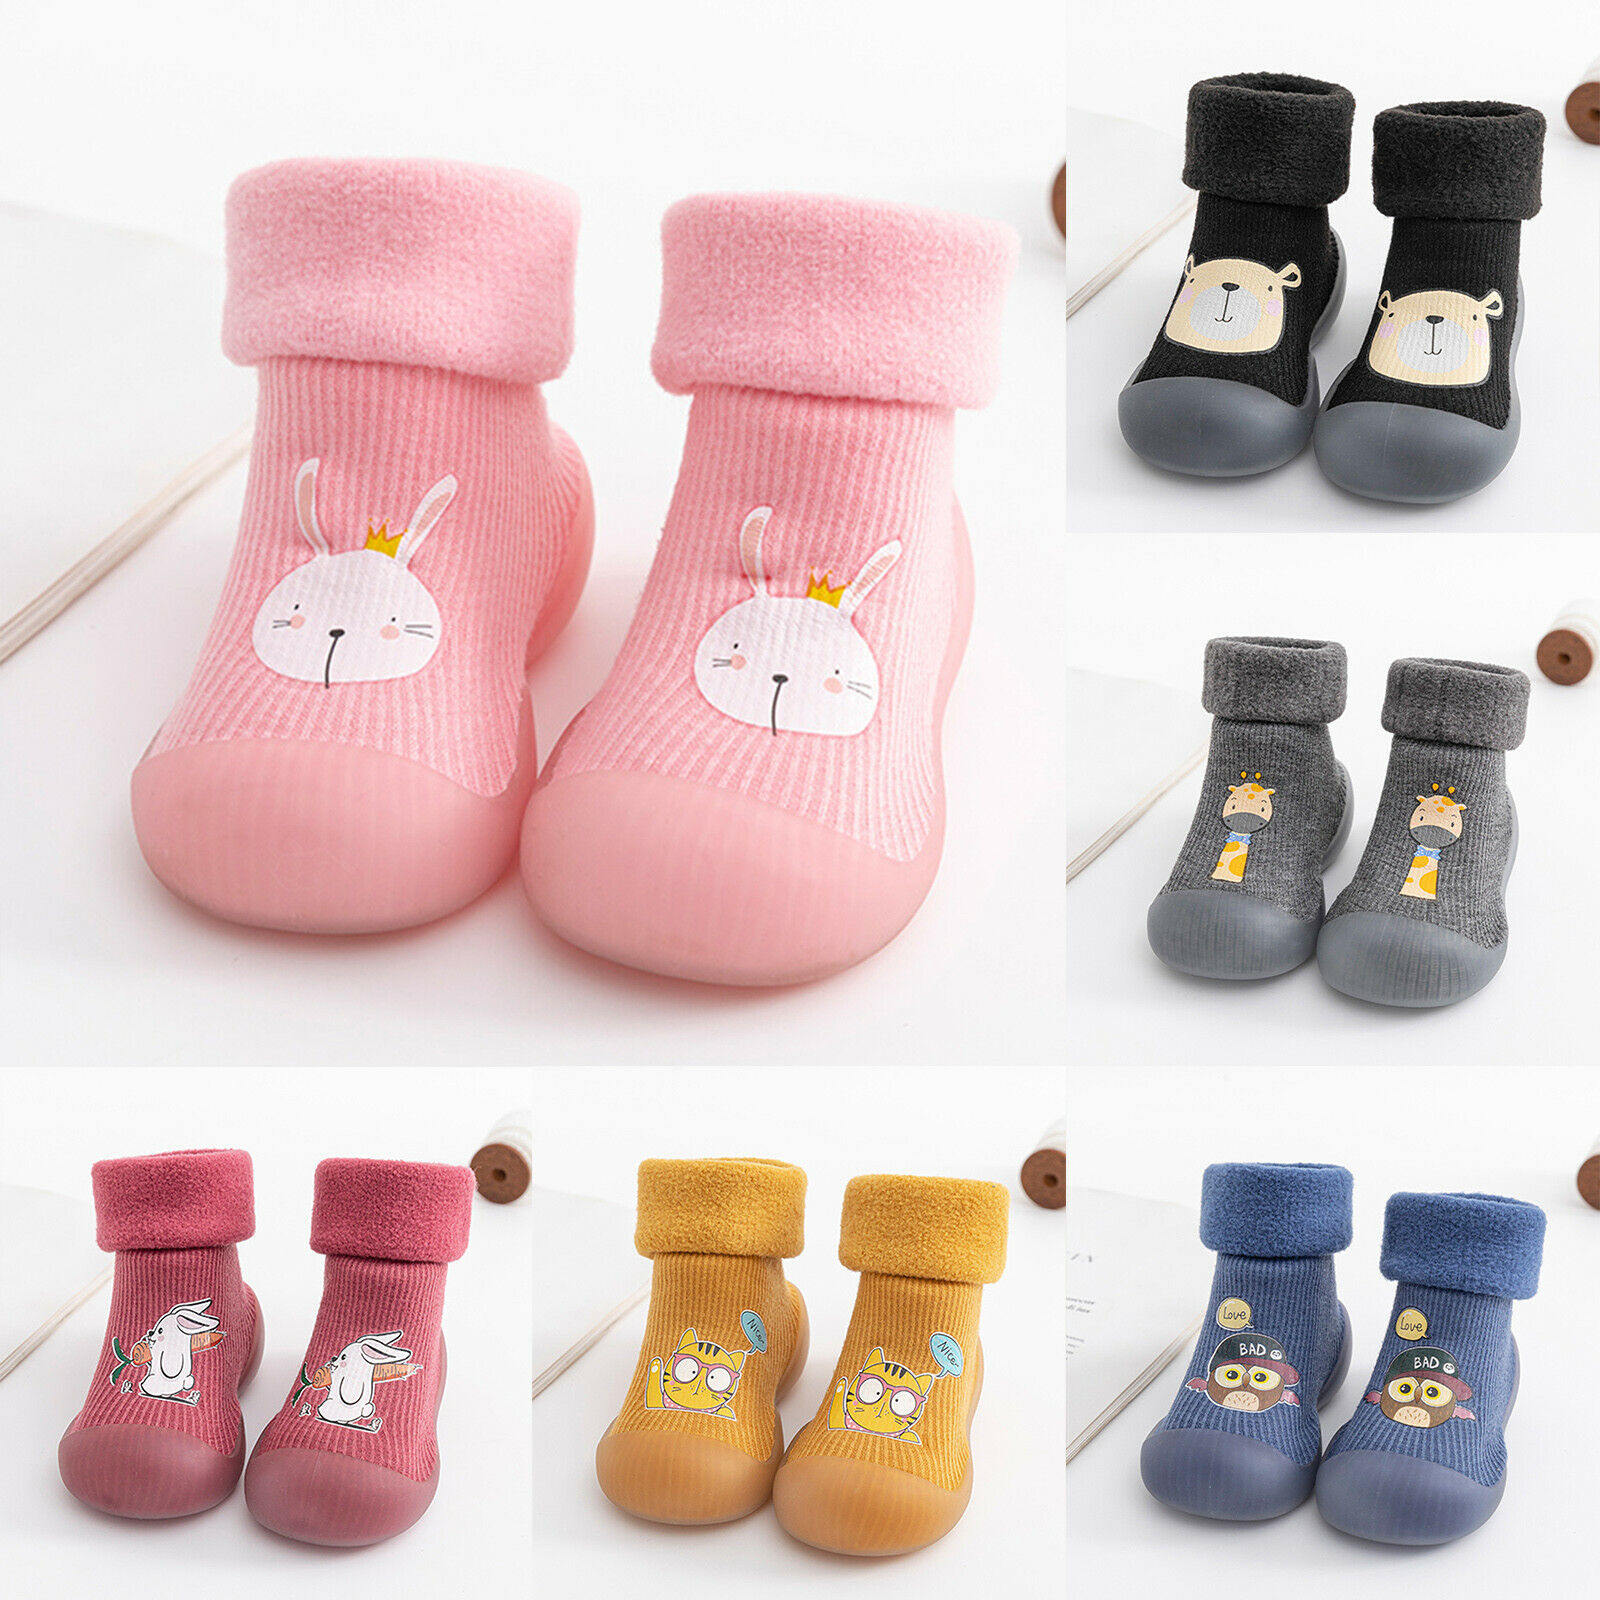 Toddler Kids Baby Boys Girls Cute Knit Soft Sole Rubber Shoes Socks Slipper